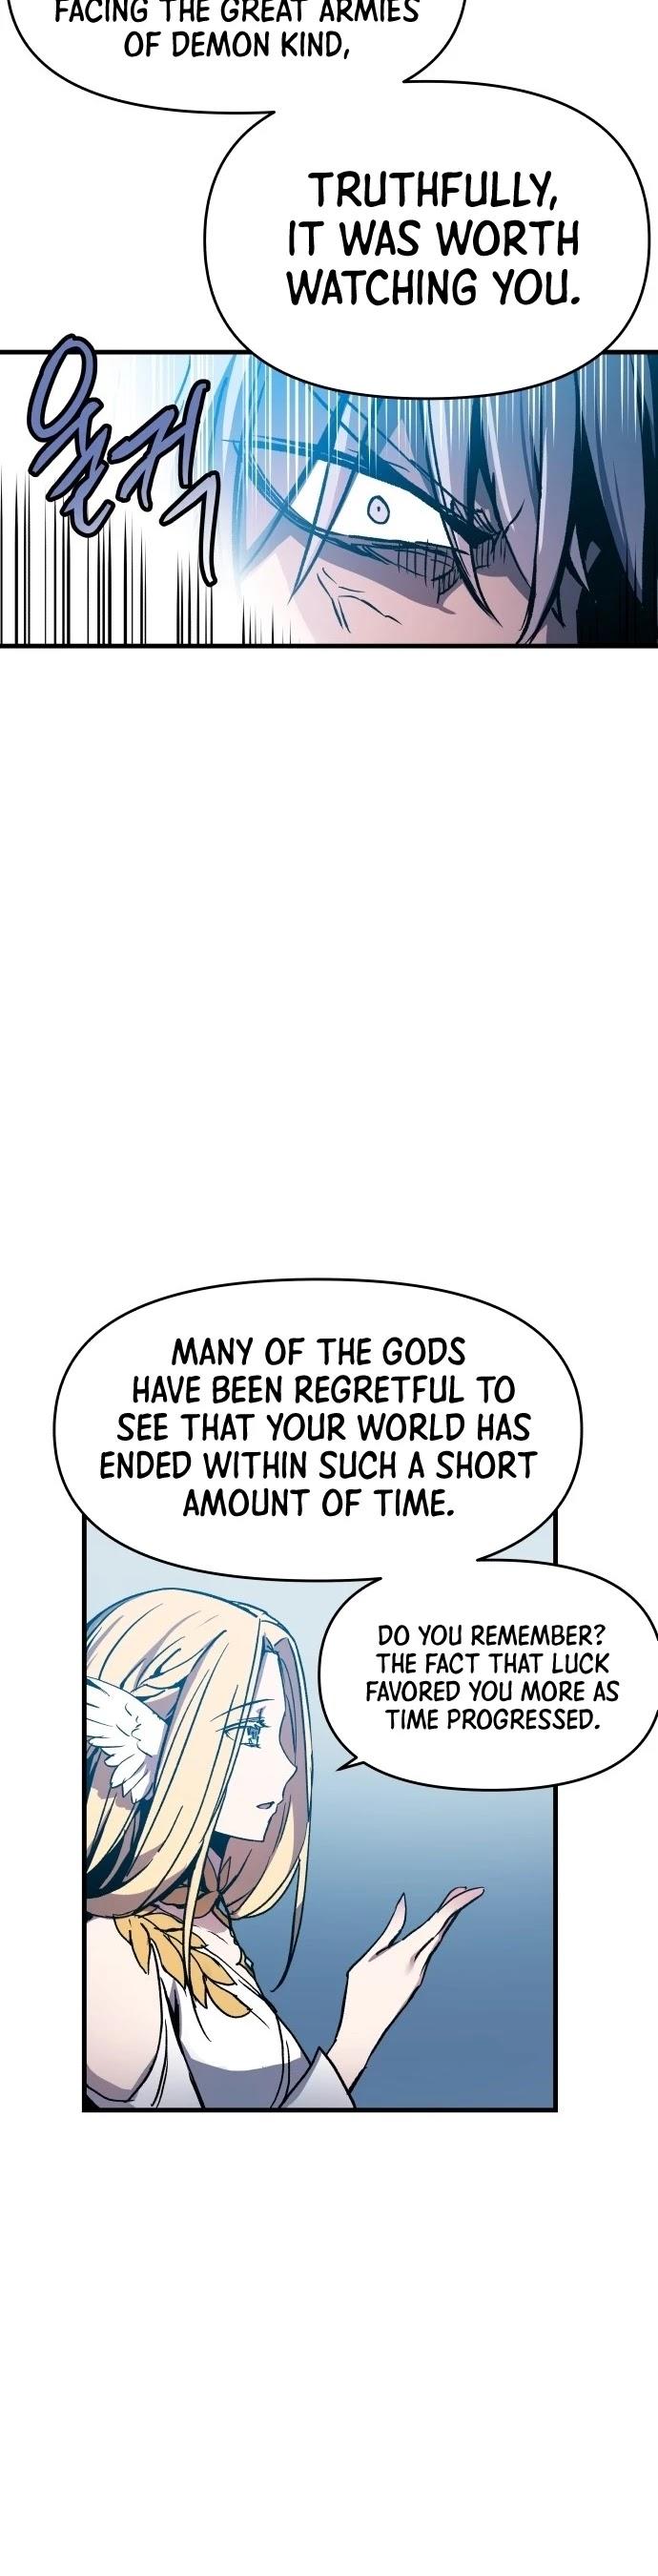 Reincarnation Of The Suicidal Battle God Chapter 1 page 50 - Mangakakalot